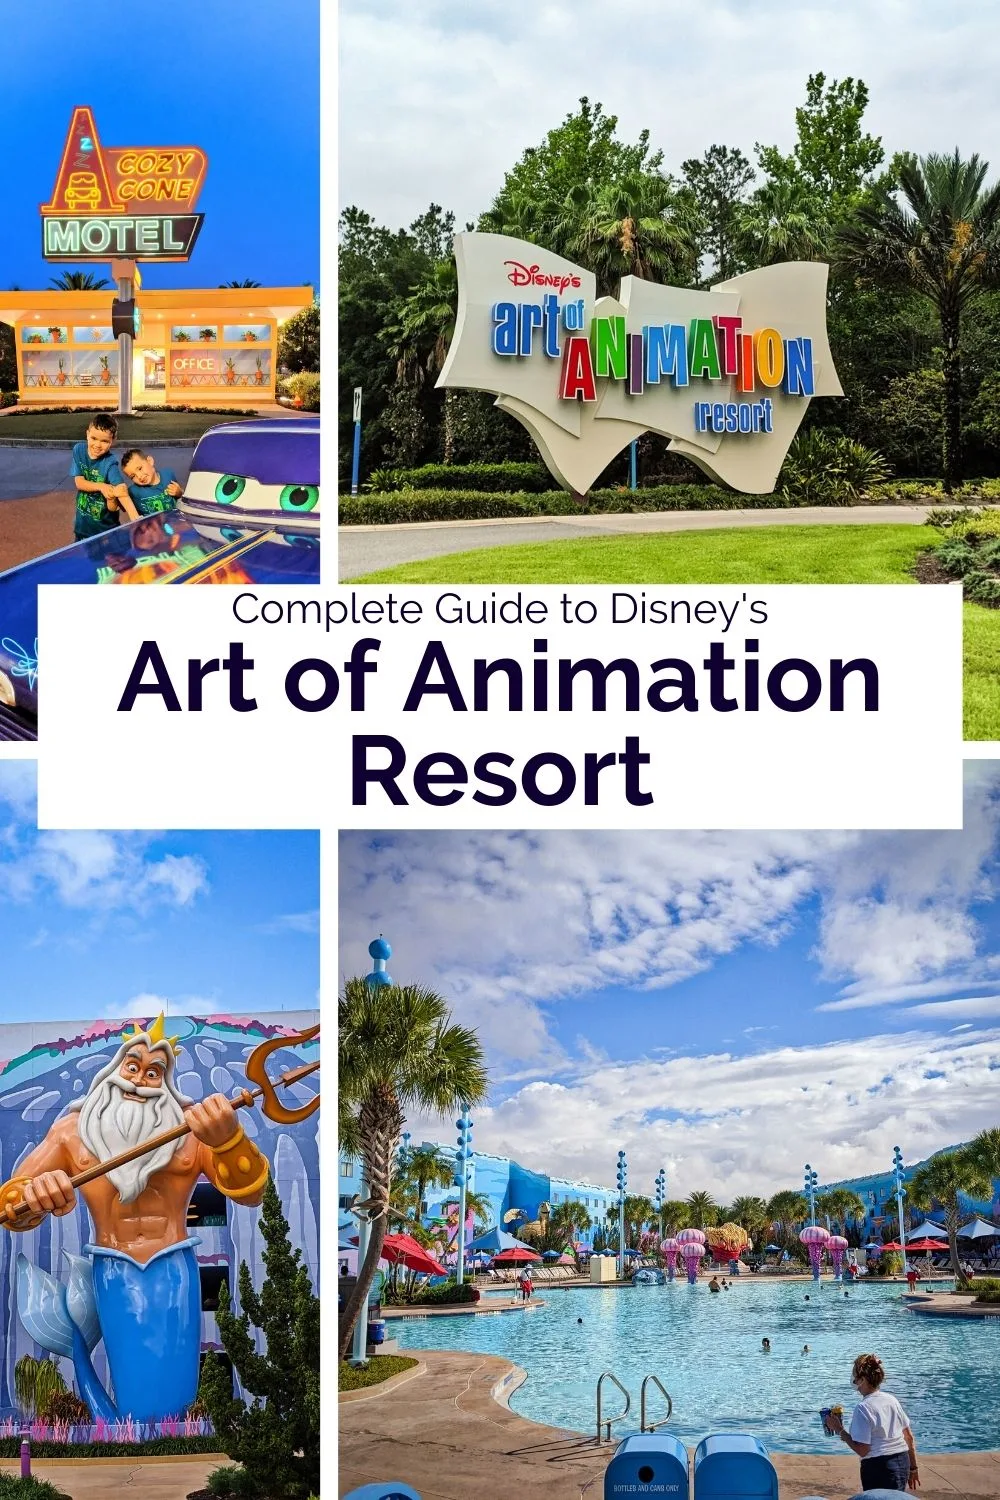 Disney's Art of Animation Resort: Top Pick for Value Level Resort